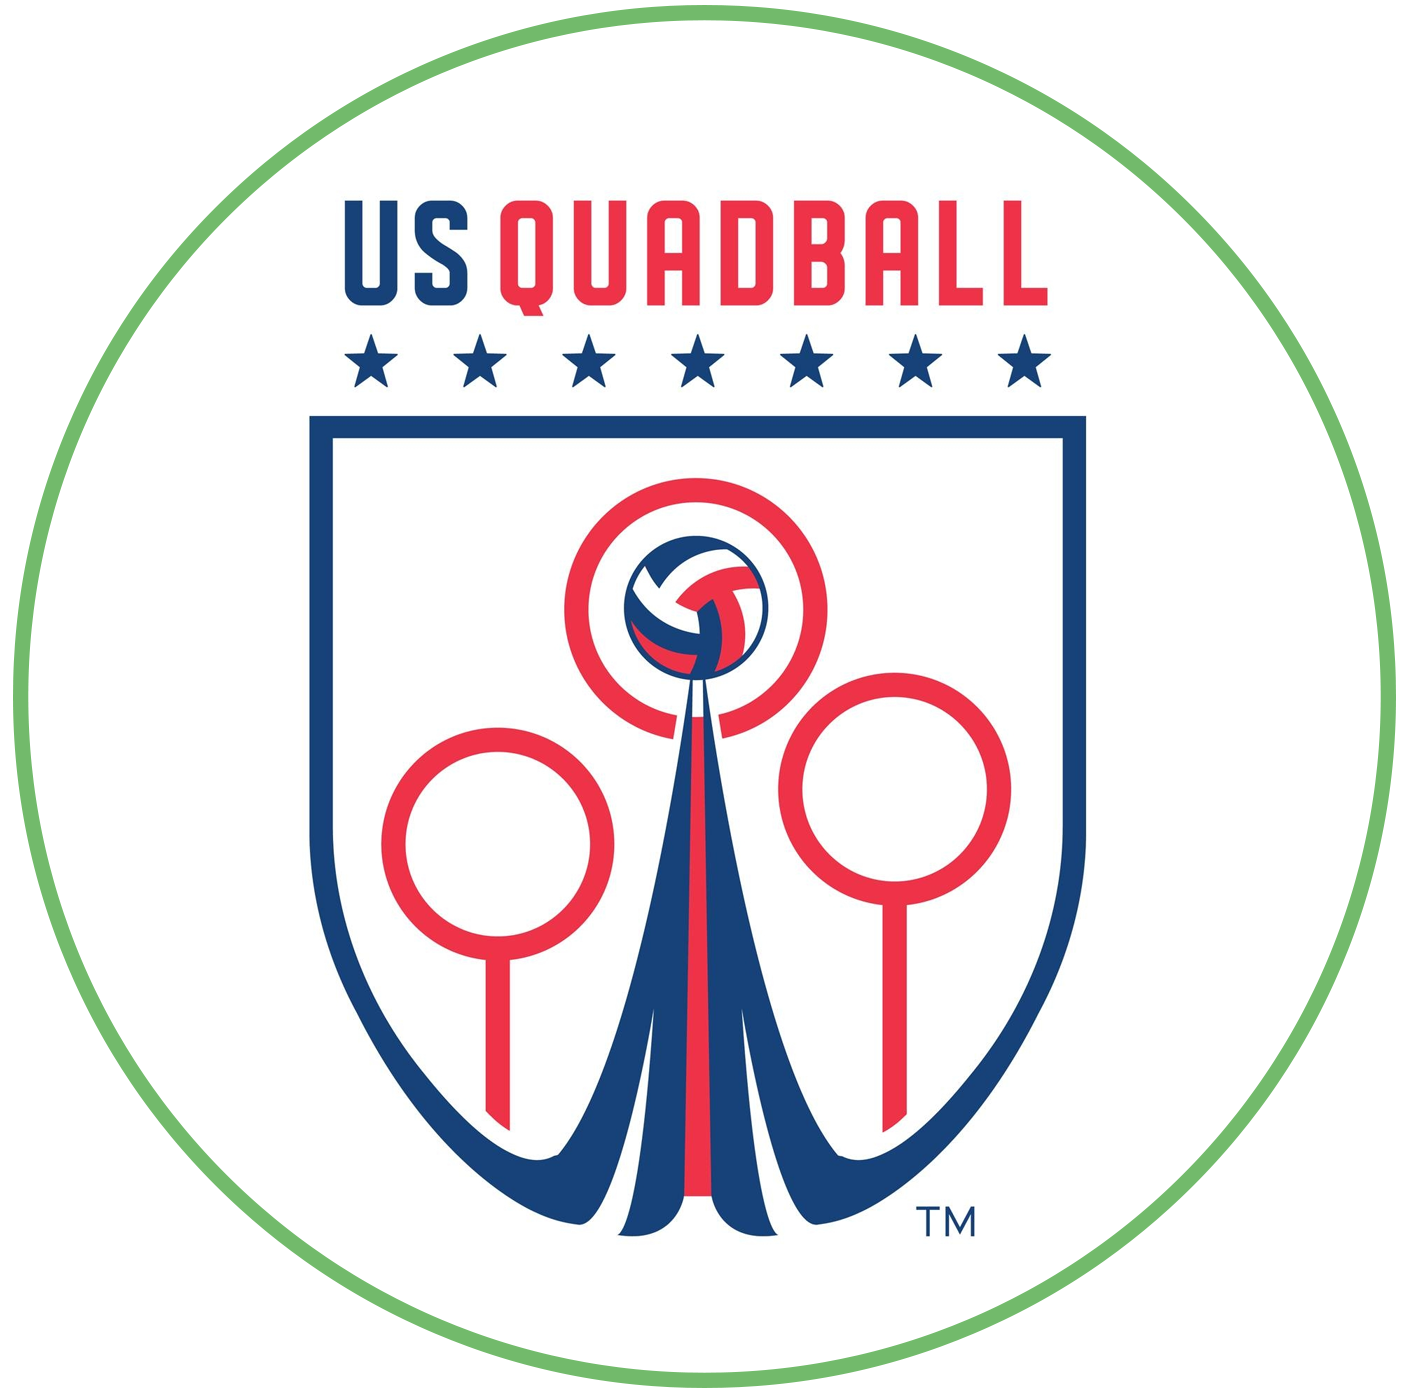 United States Quadball logo